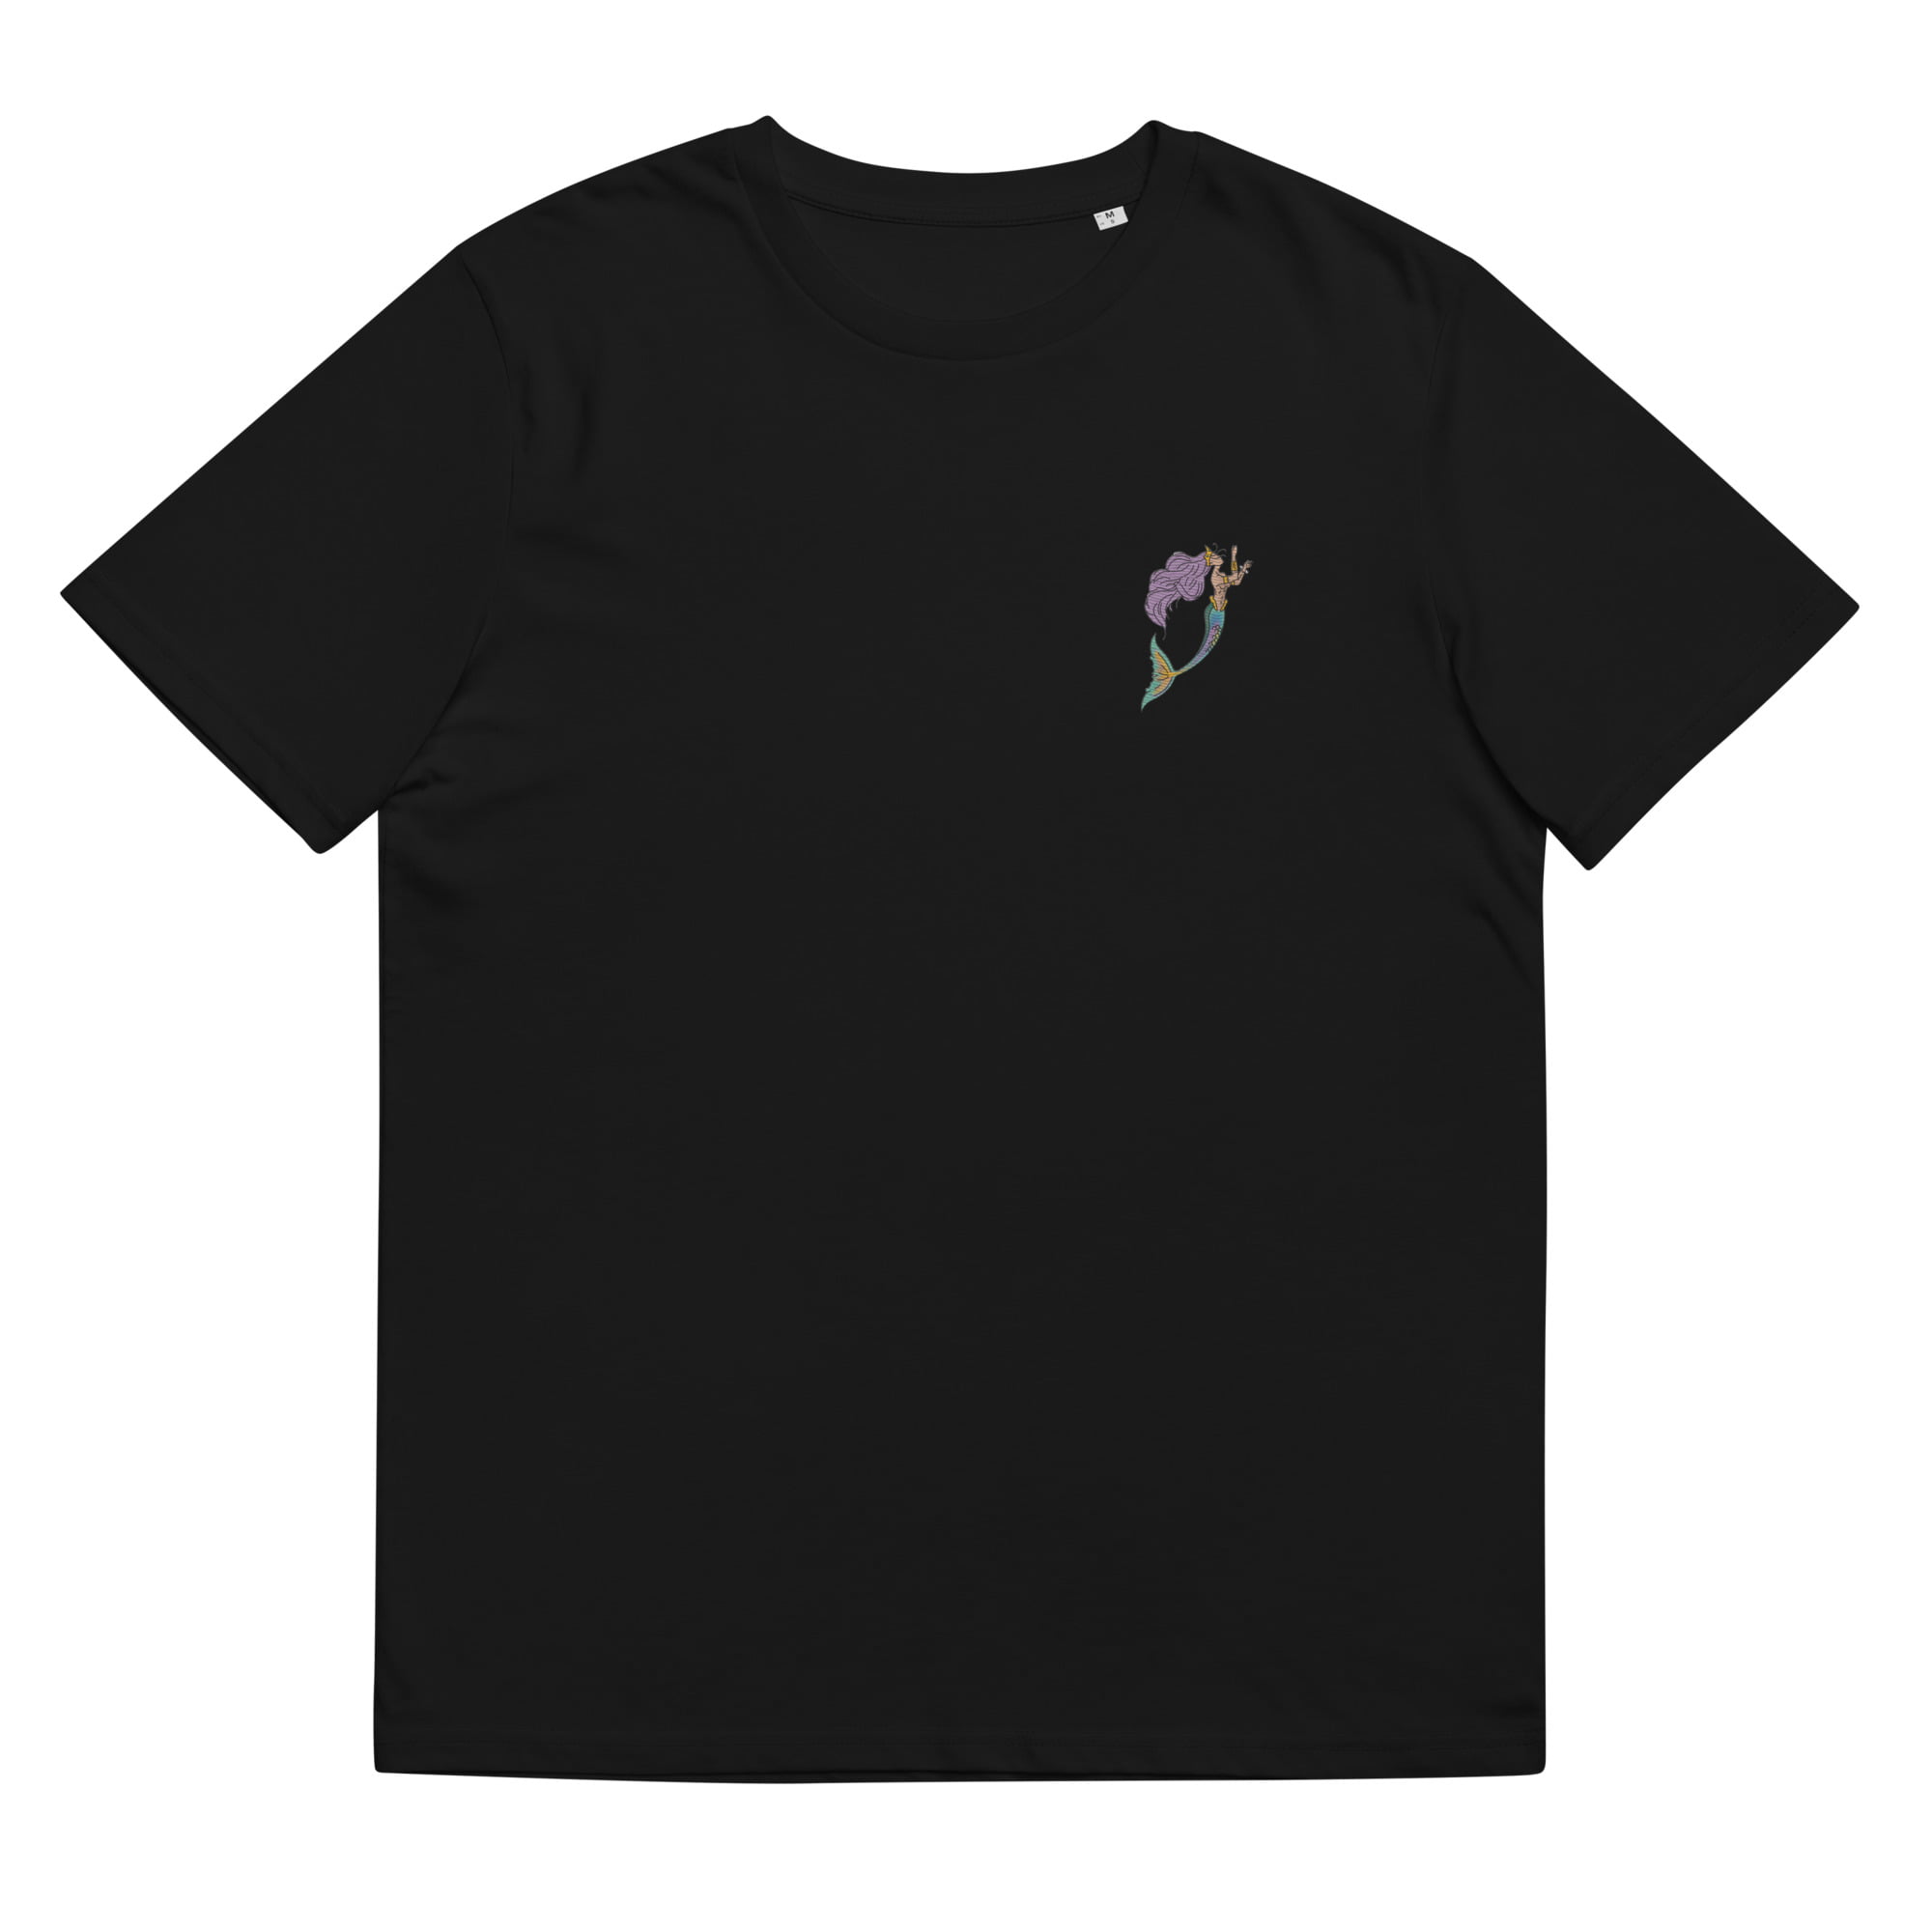 unisex organic cotton t shirt black front 6478ad41be7ed